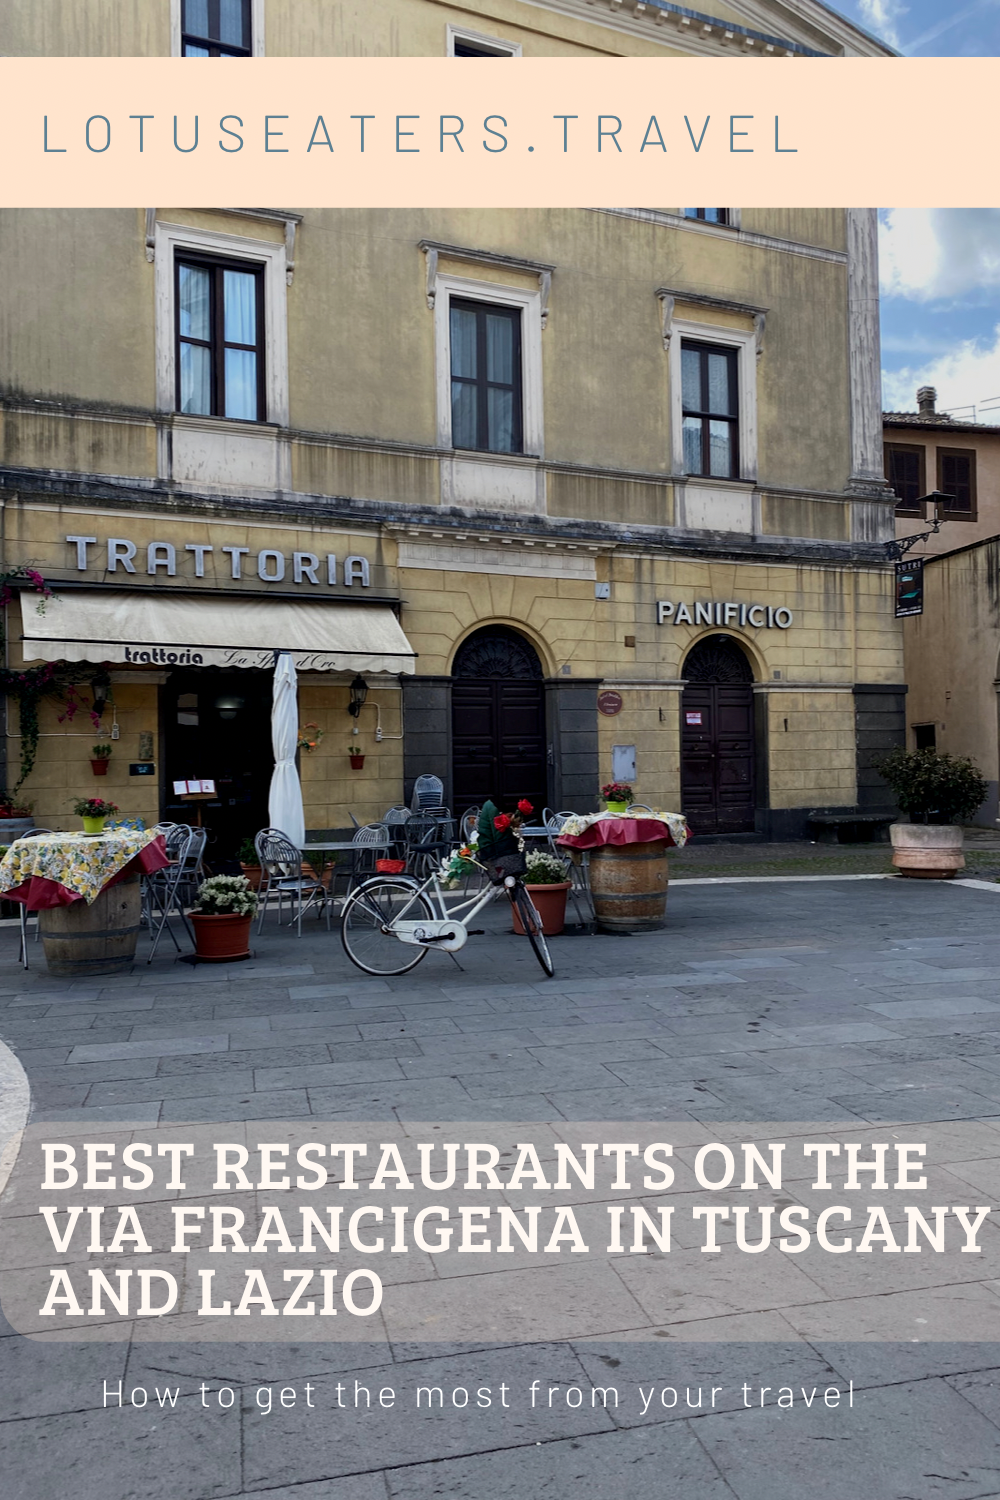 Best restaurants on the Via Francigena in Tuscany and Lazio